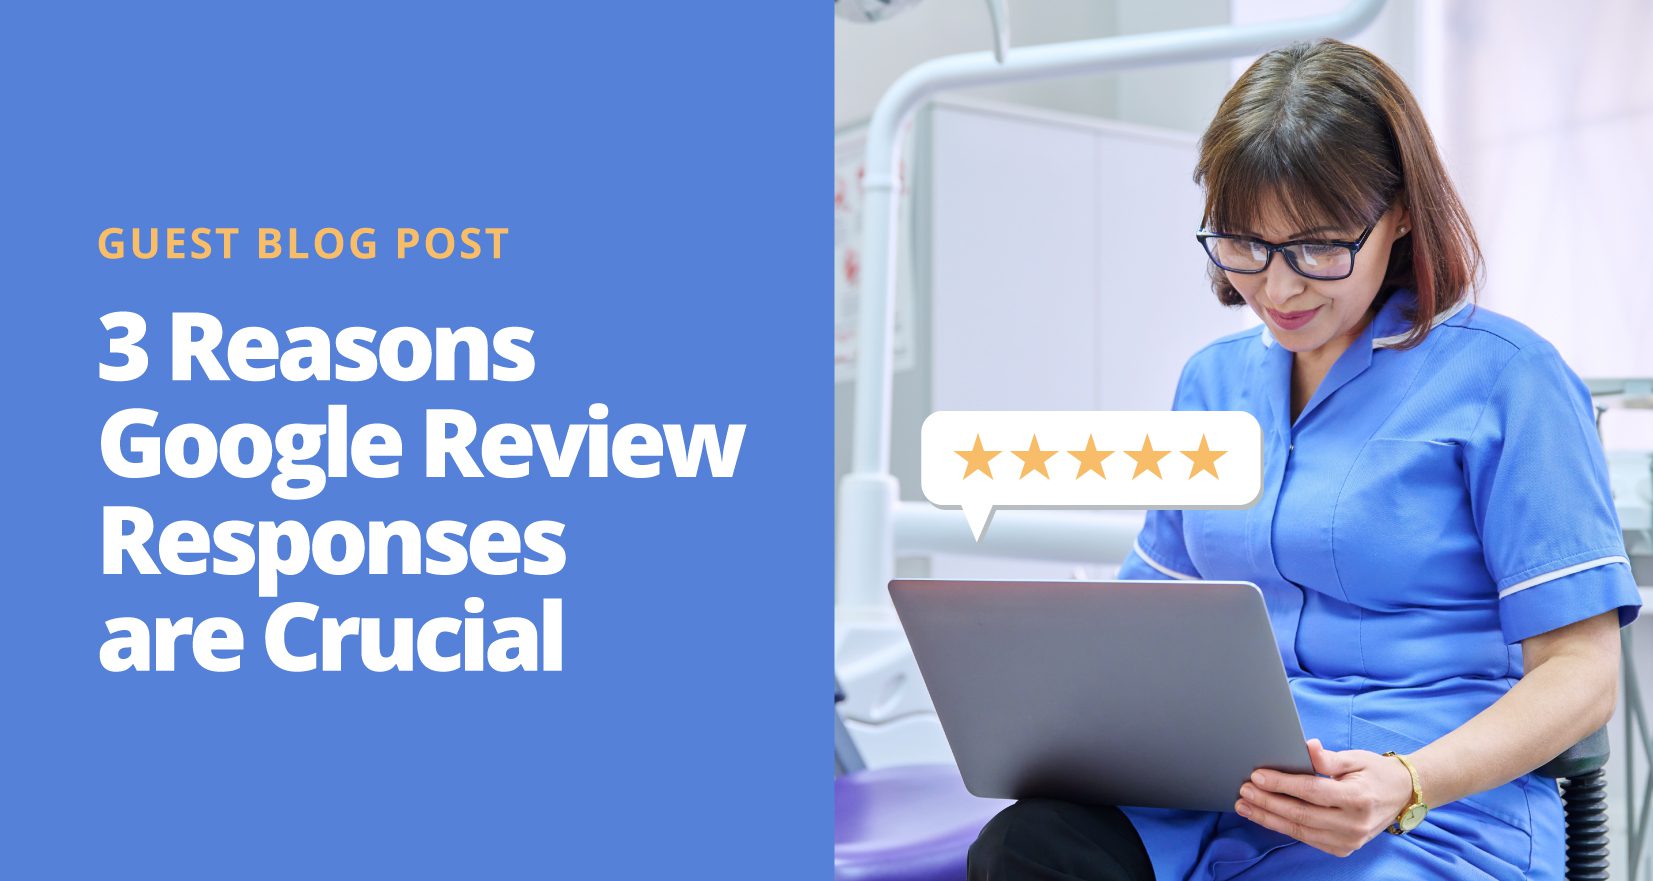 My Social Practice - Social Media Marketing for Dental & Dental Specialty Practices - responding to Google reviews